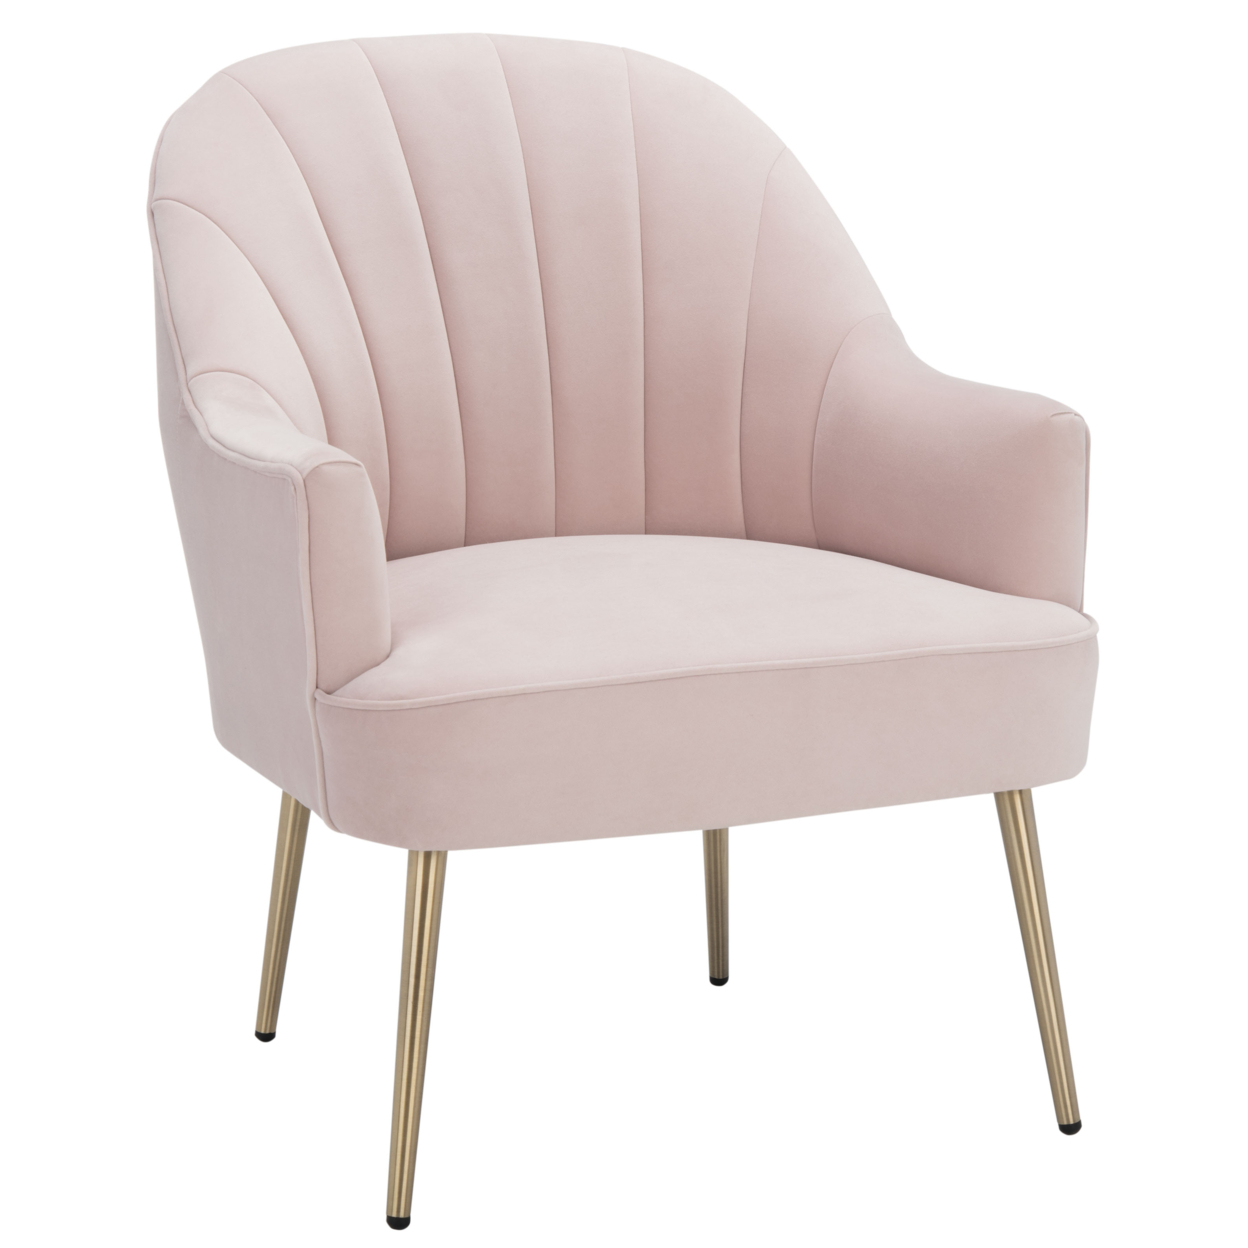 SAFAVIEH Areli Accent Chair Light Pink